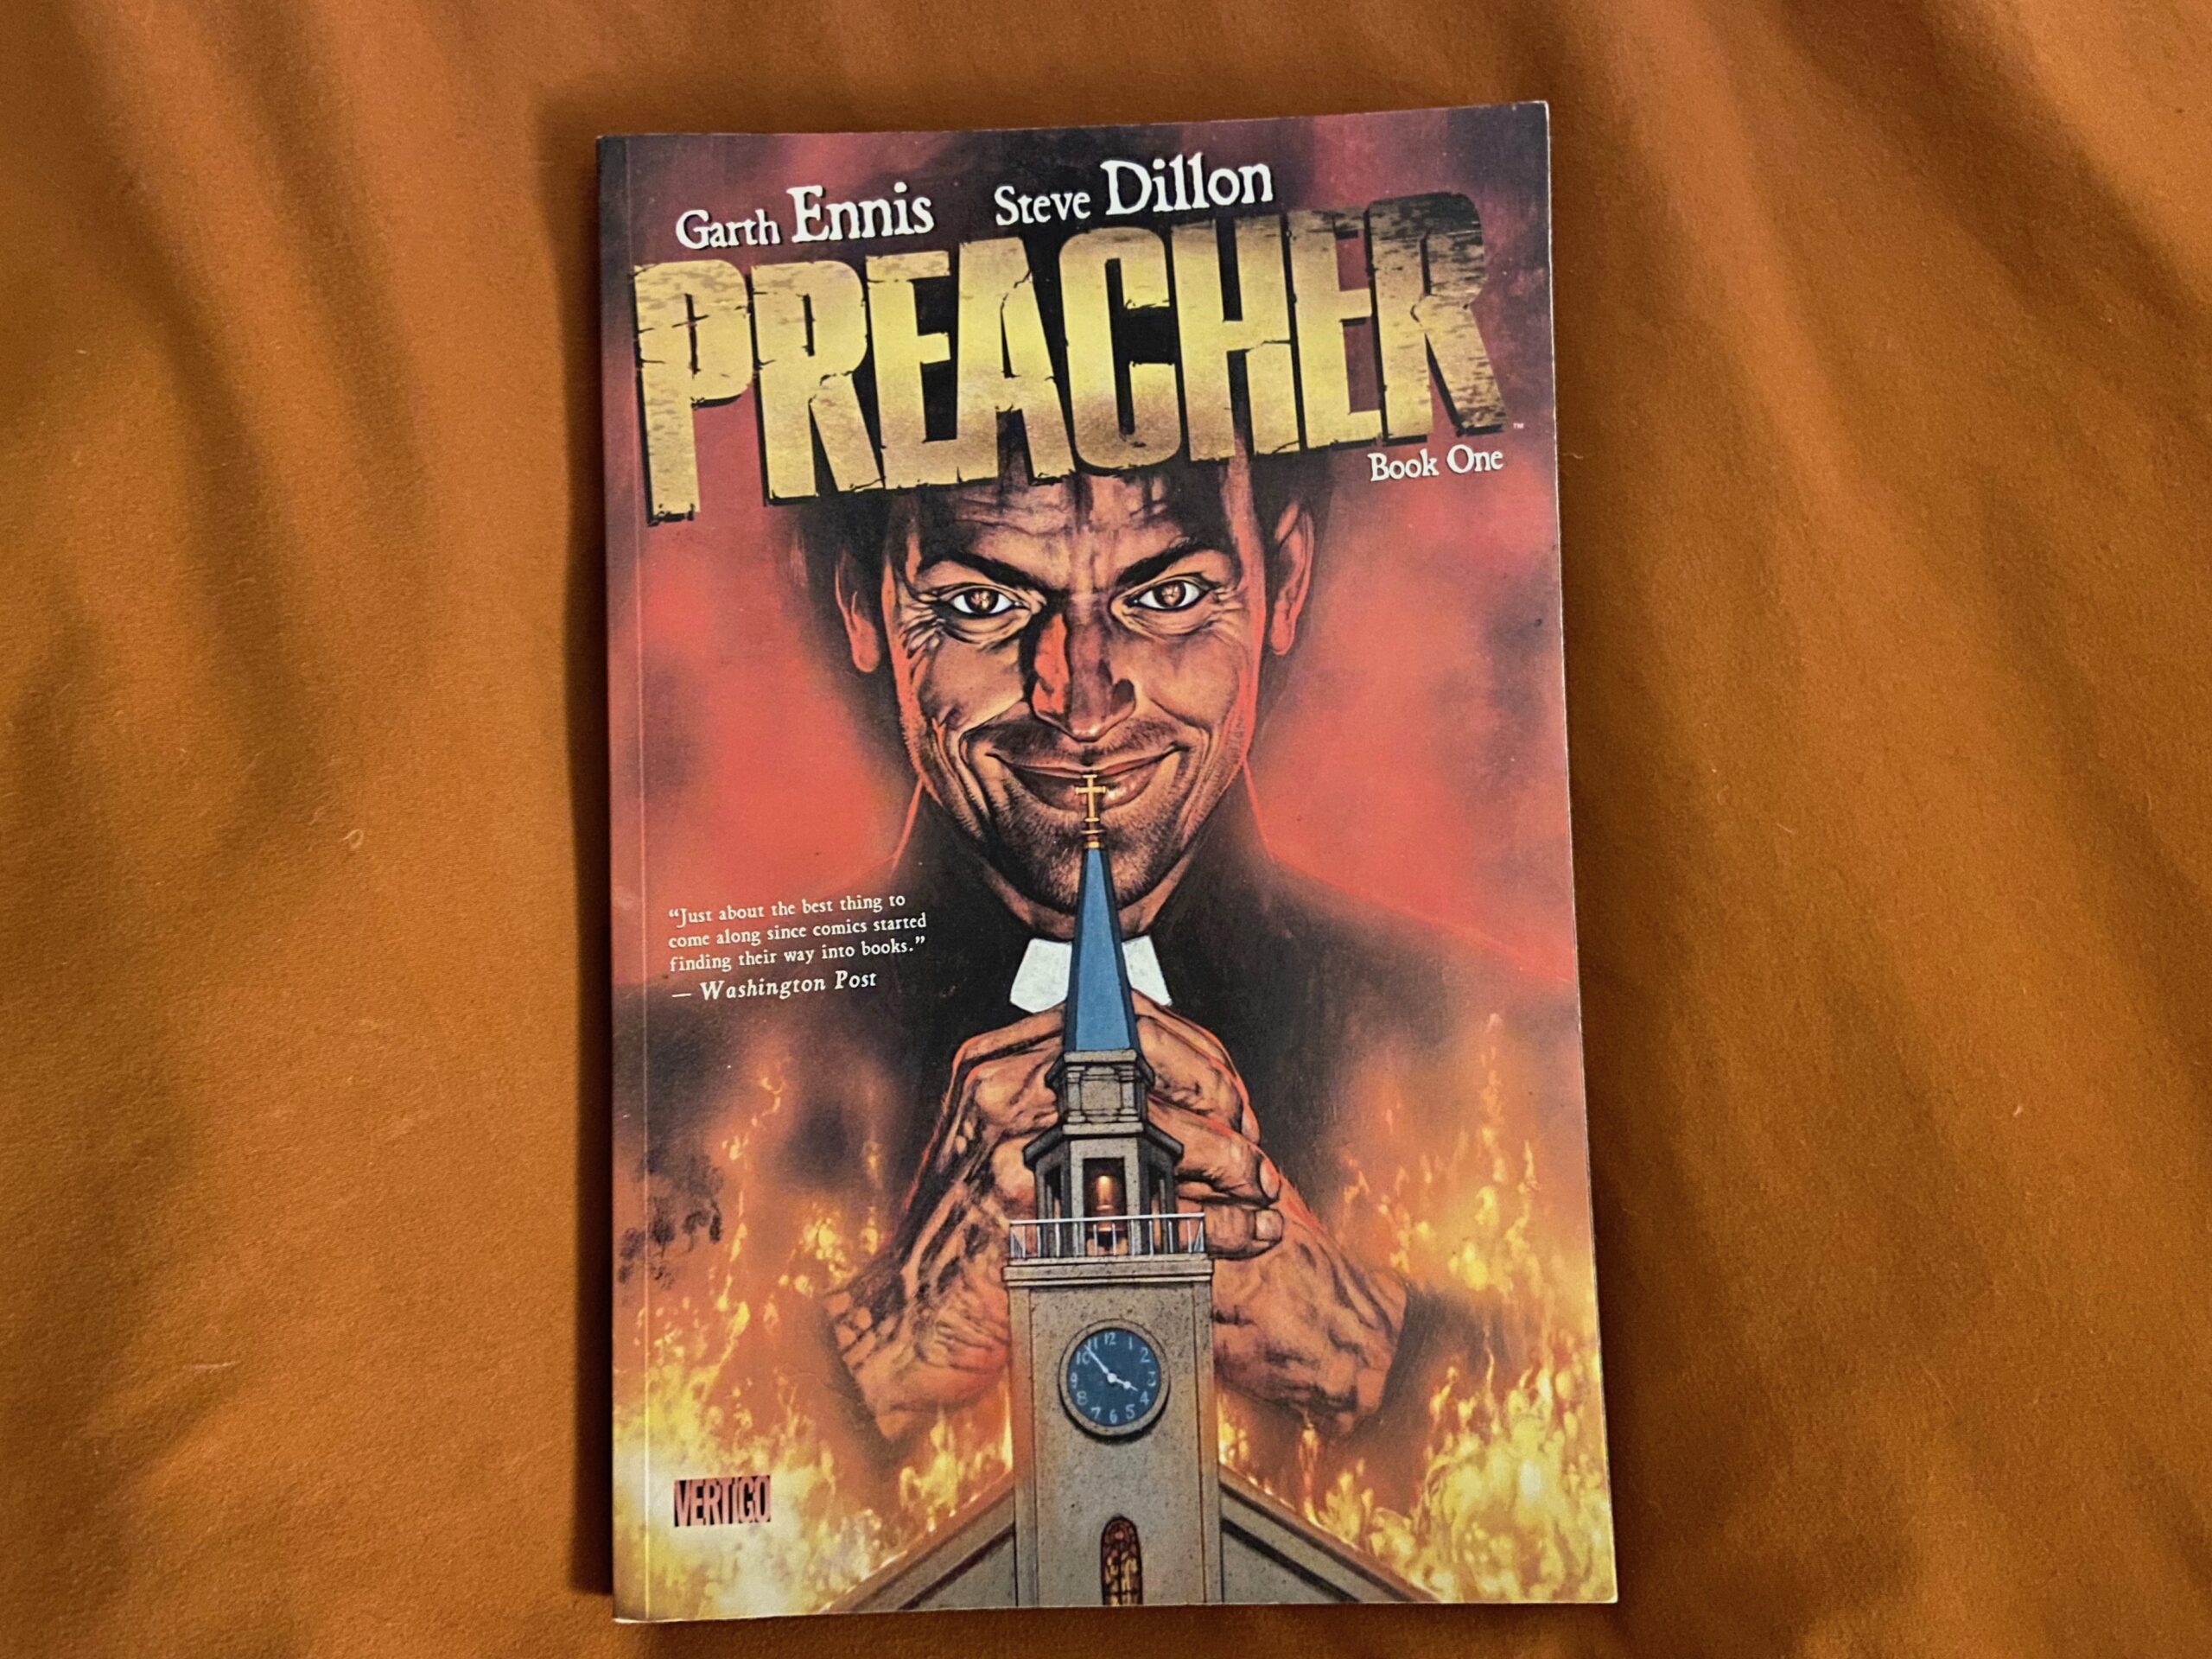 preacher book one cover